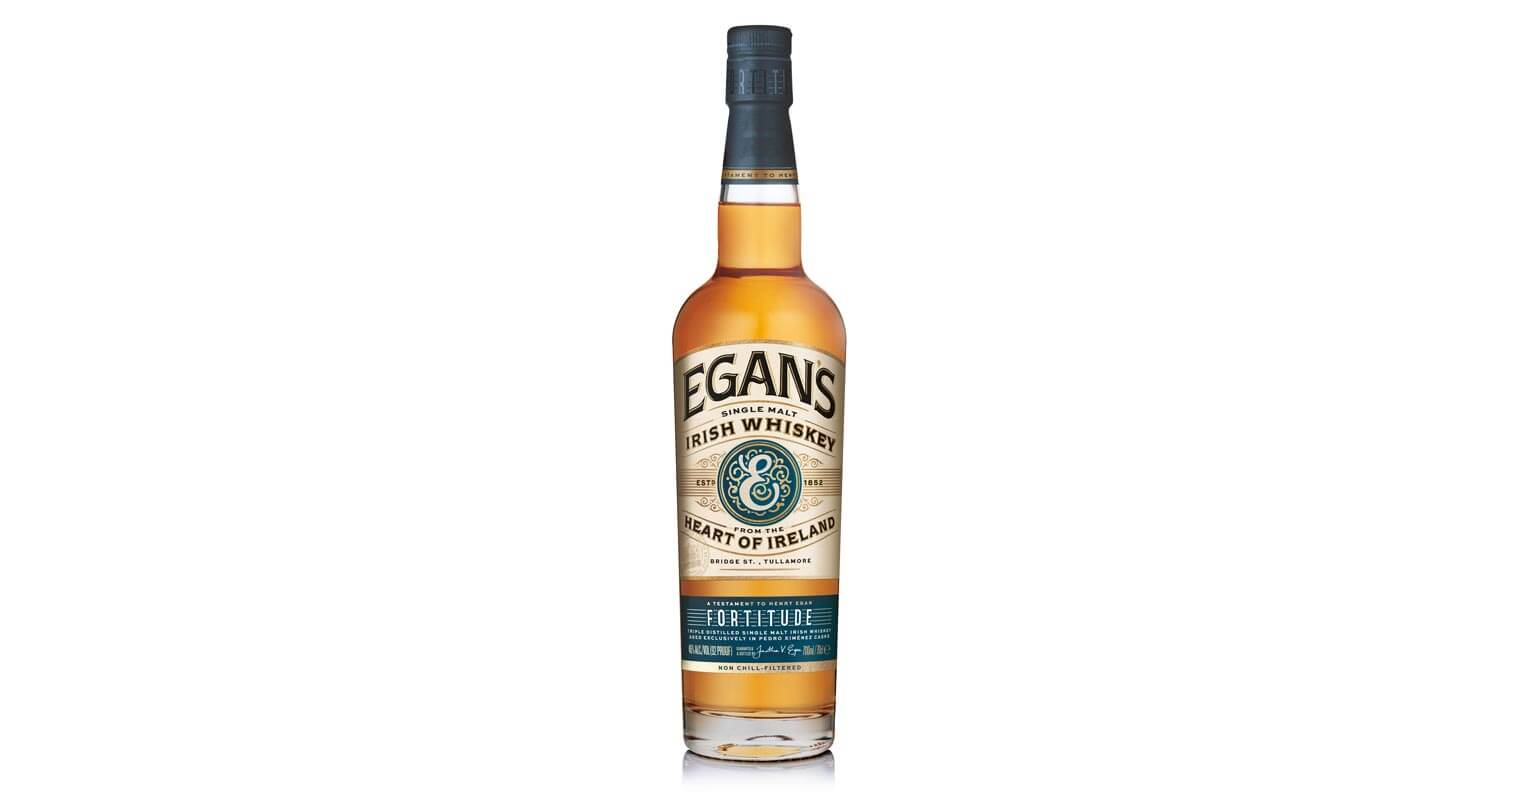 Egan’s Irish Whiskey Fortitude, bottle on white, featured image